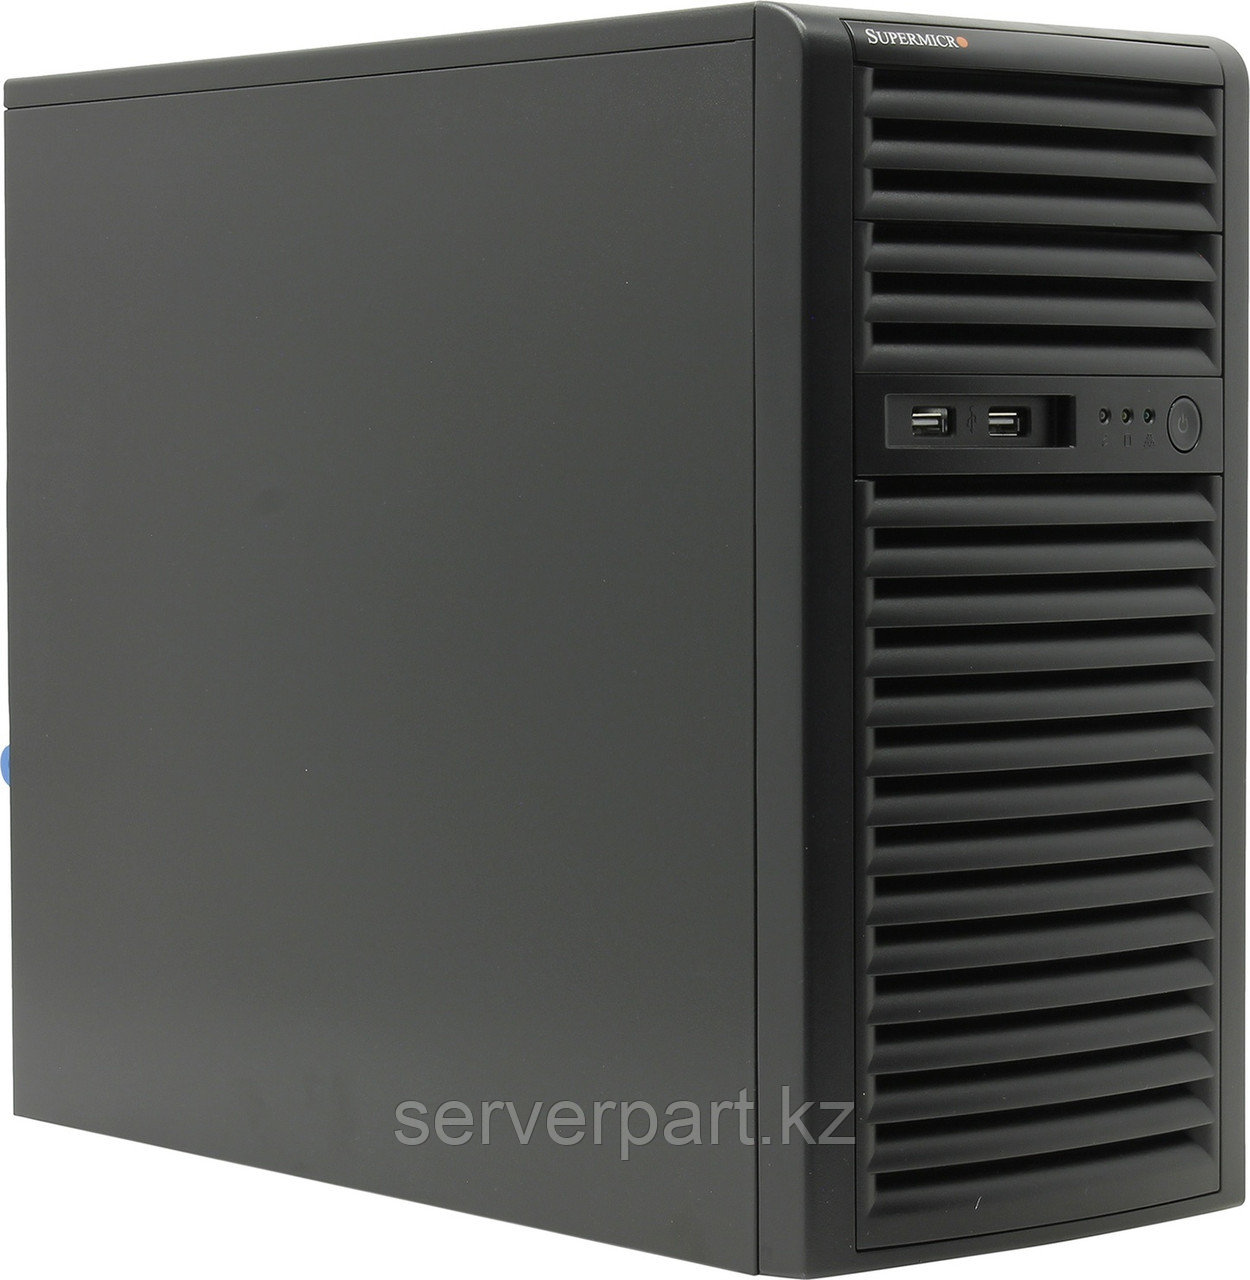 Сервер Supermicro SYS-5039D Tower 4LFF/4-core intel Xeon E3-1220v6 3GHz/32GB EUDIMM/2x240GB SSD RI Hyb, фото 1